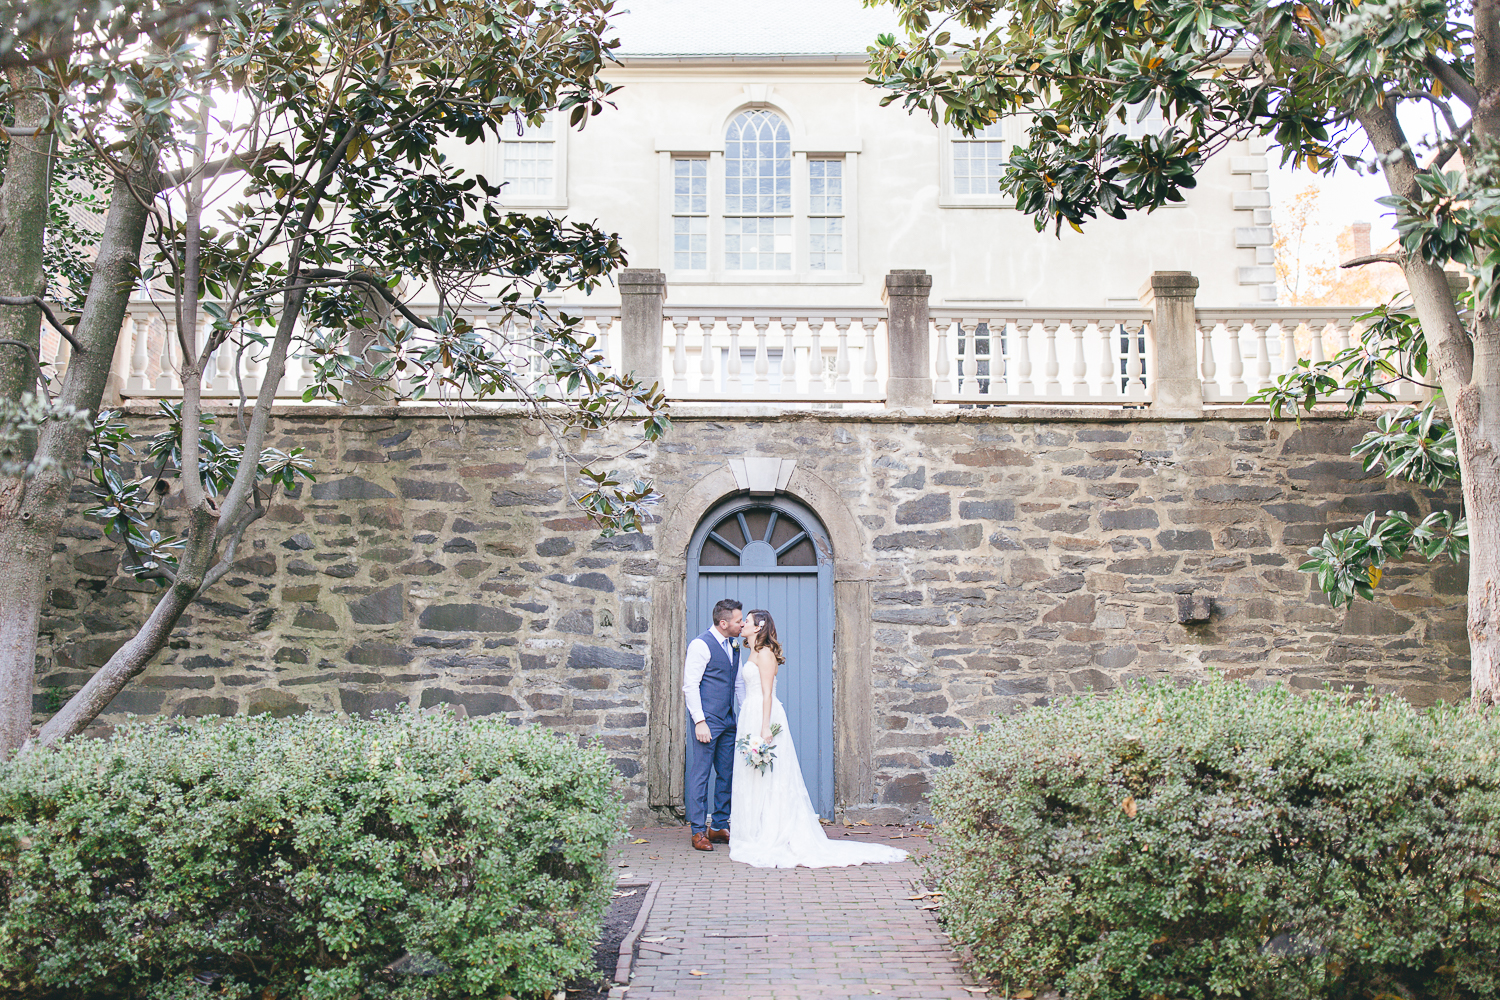 Carlyle House Elopement | Maral Noori Photography | Virginia Wedding Photographer